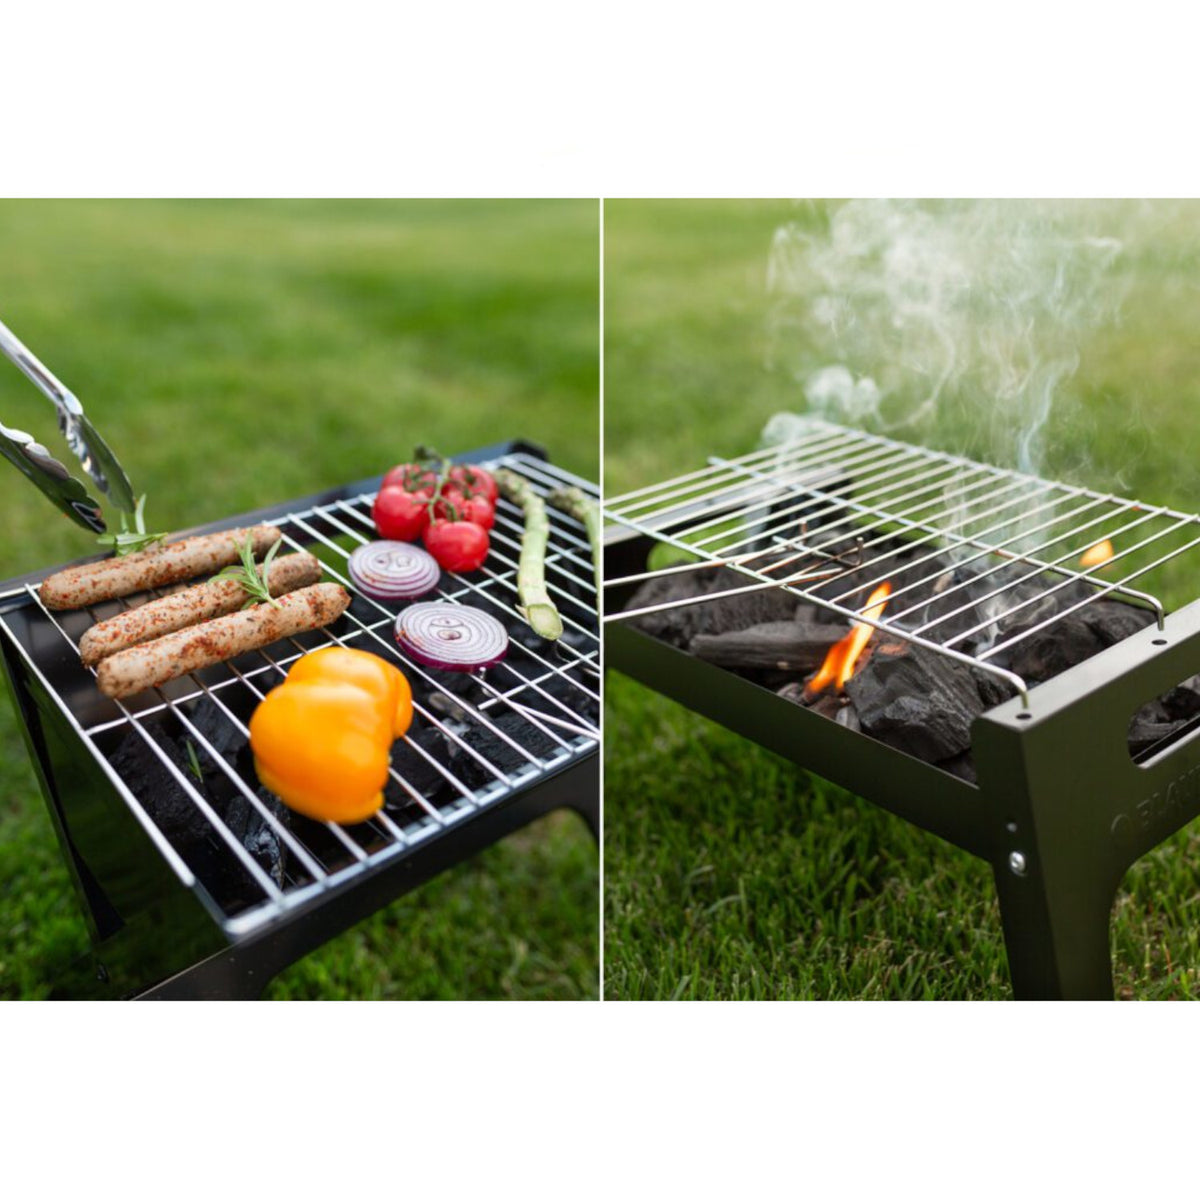 Travel Charcoal BBQ Euroelectronics Portable Garden Grill – Foldable EU Camping Barbecue